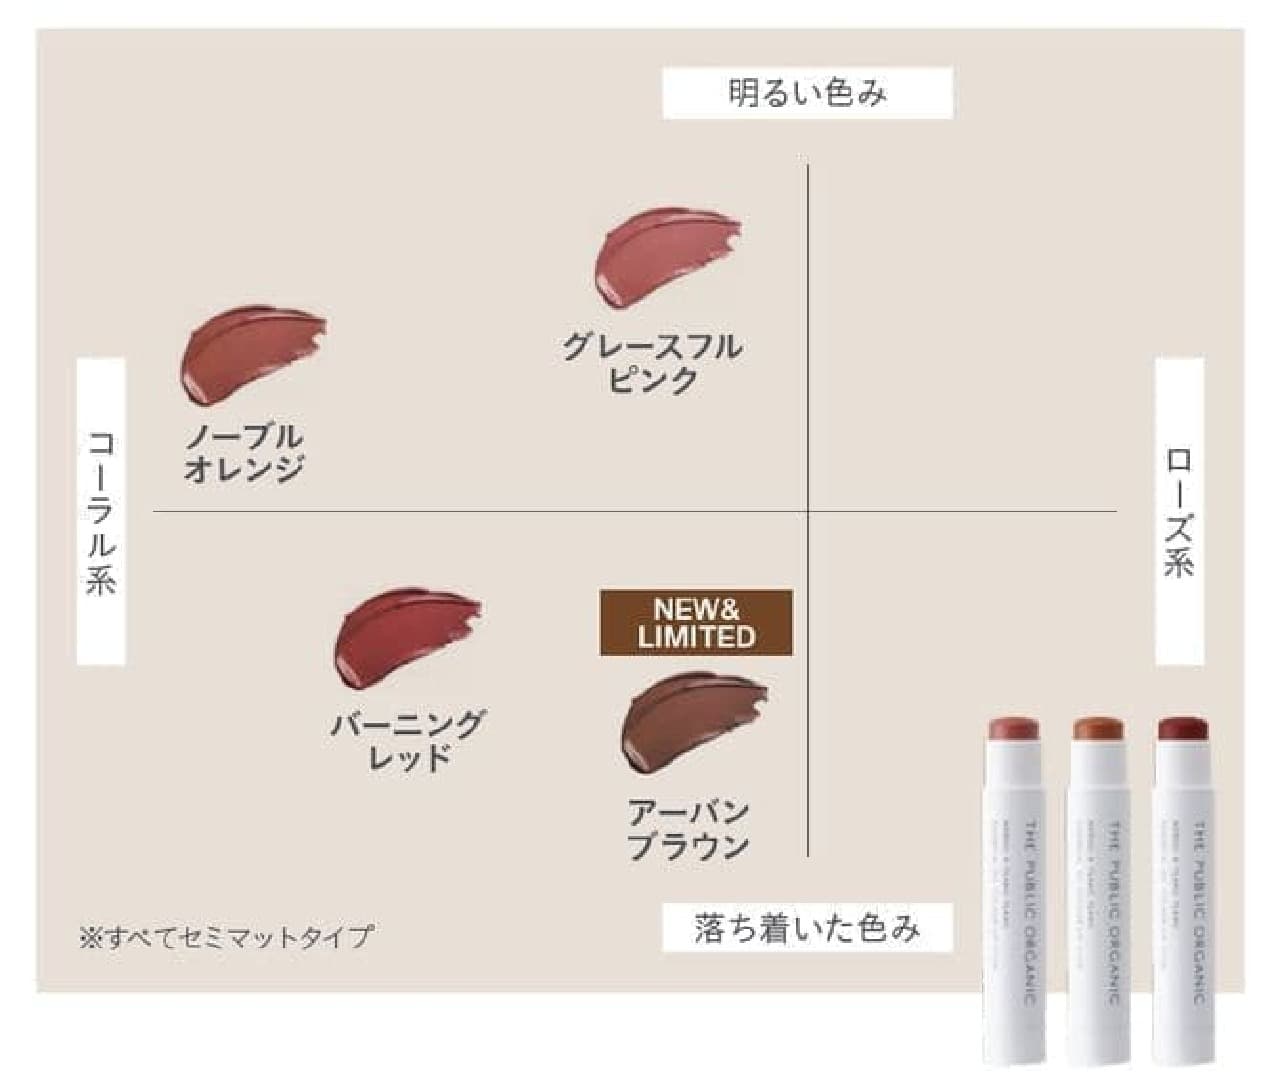 Limited color "Urban Brown" of "The Public Organic Super Feminine Color Lipstick"